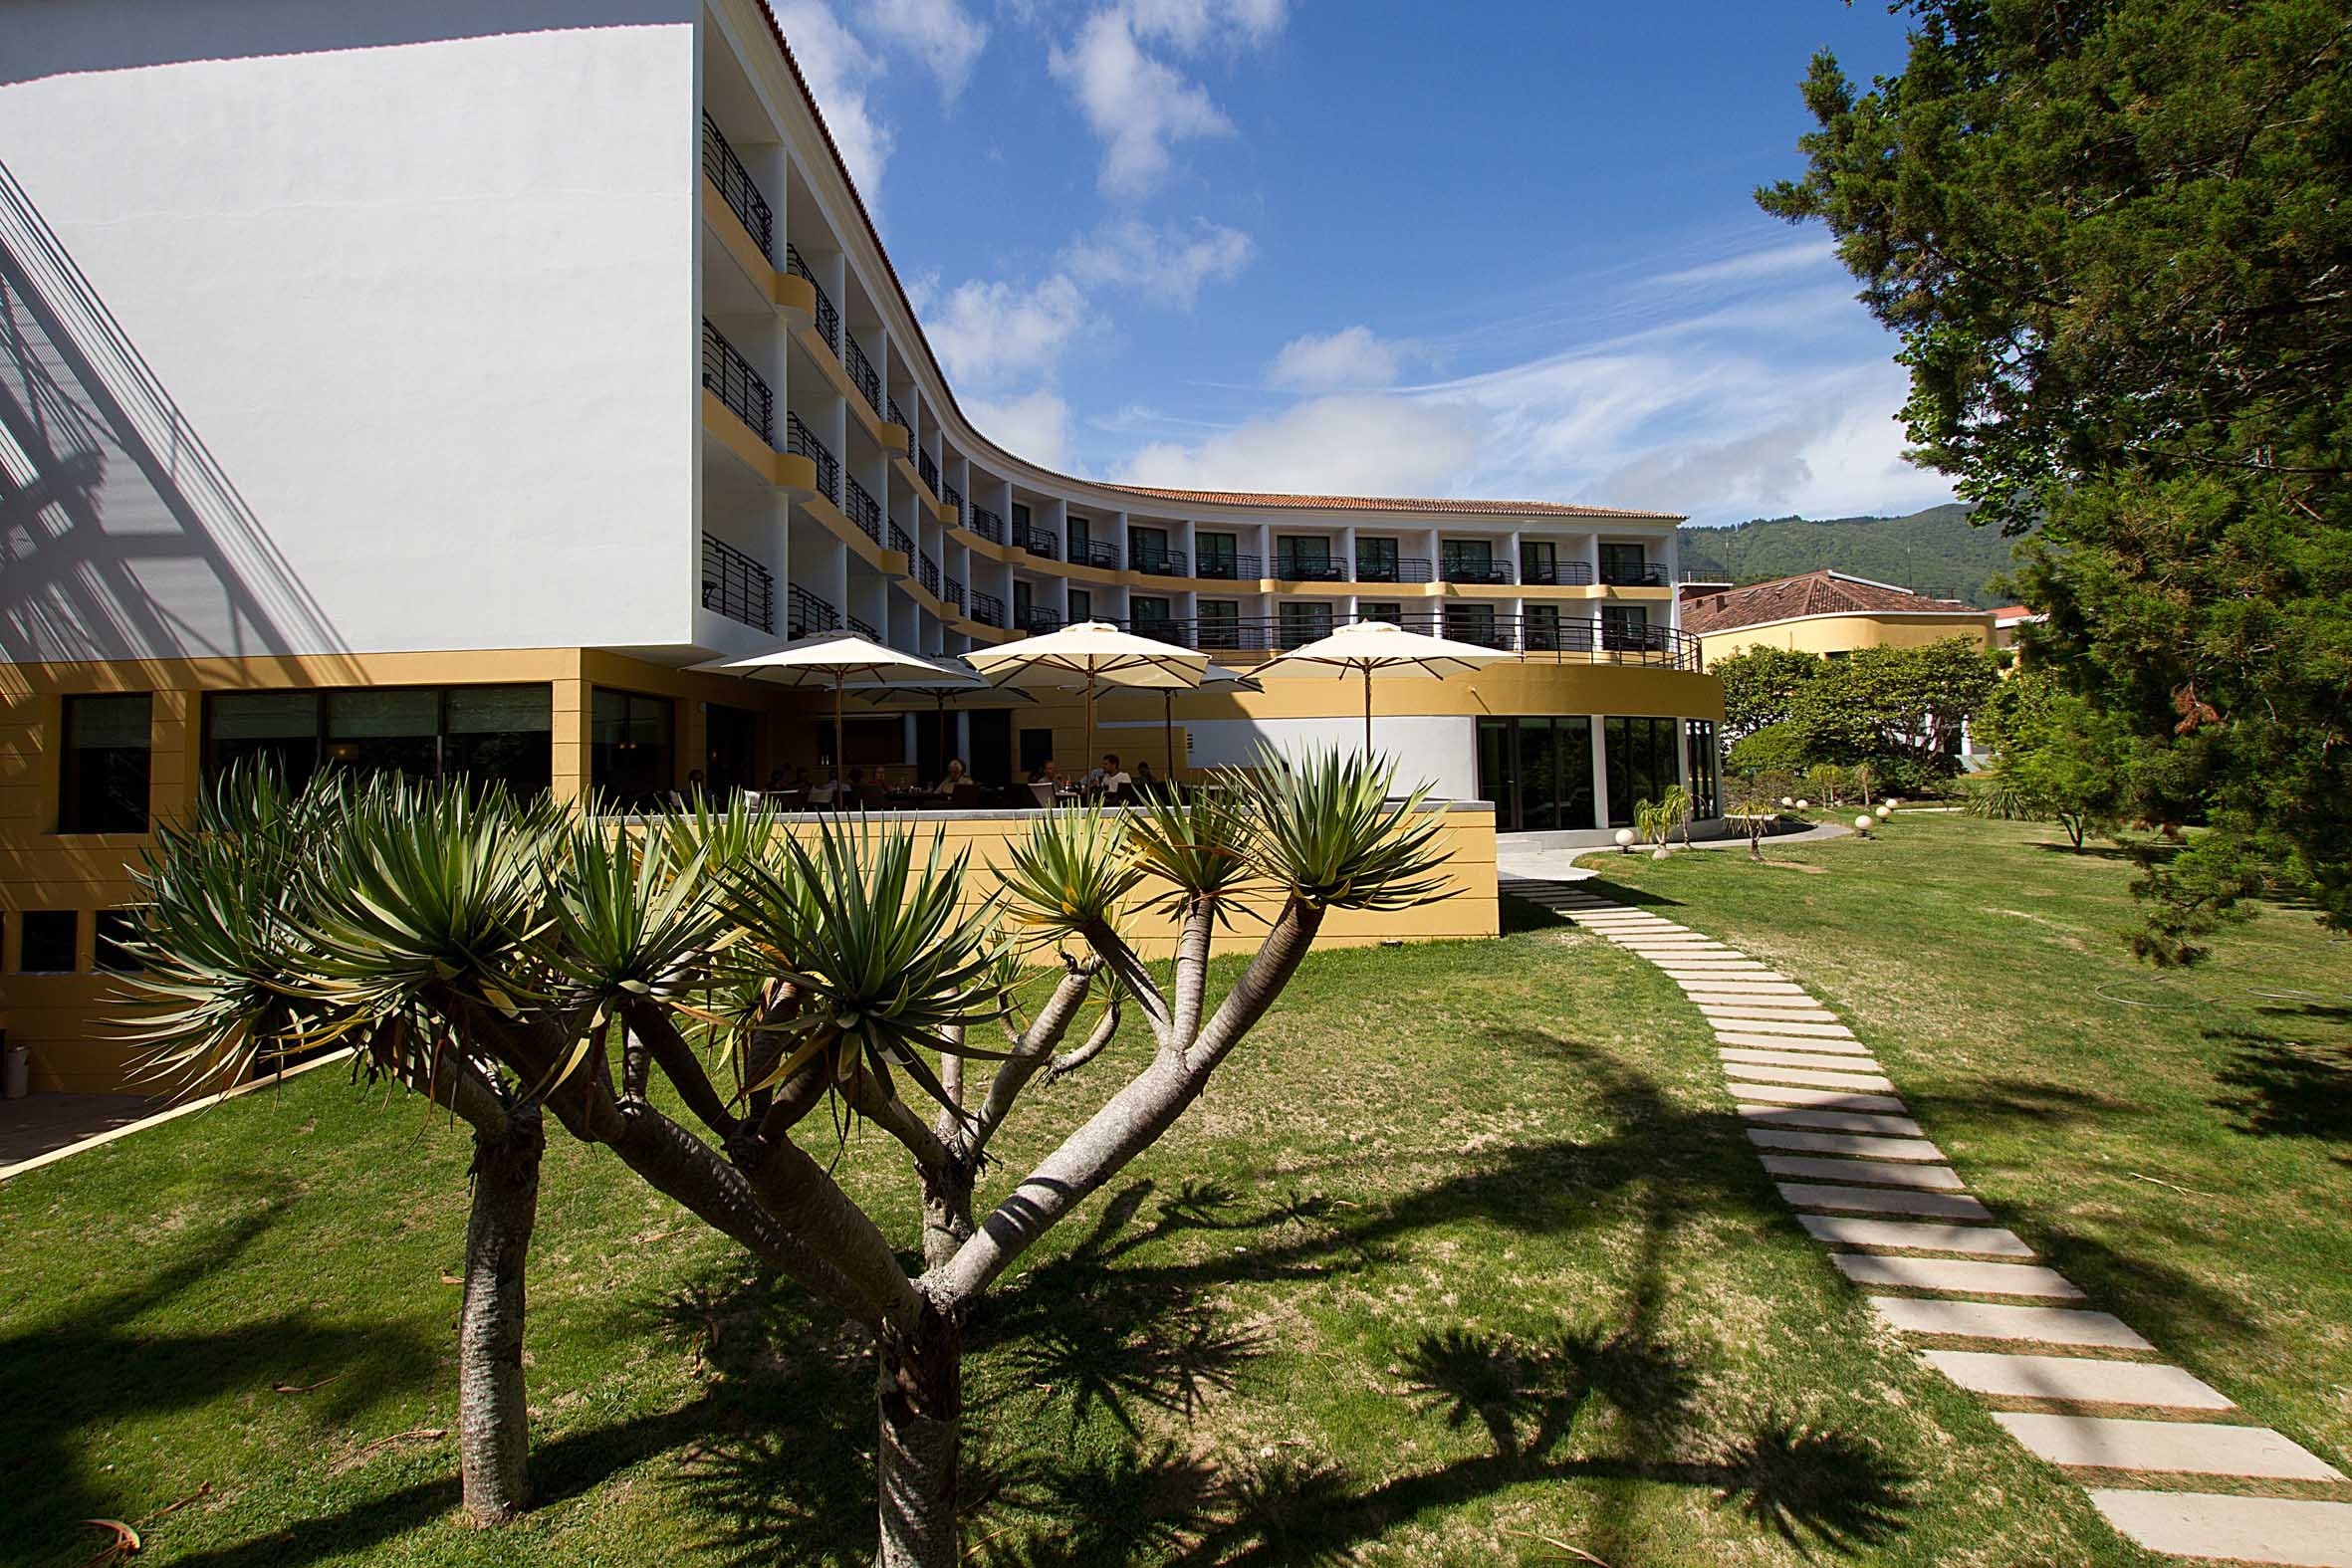 Hotel Terra Nostra Garden - Furnas, Povoação presso HRS con servizi gratuiti